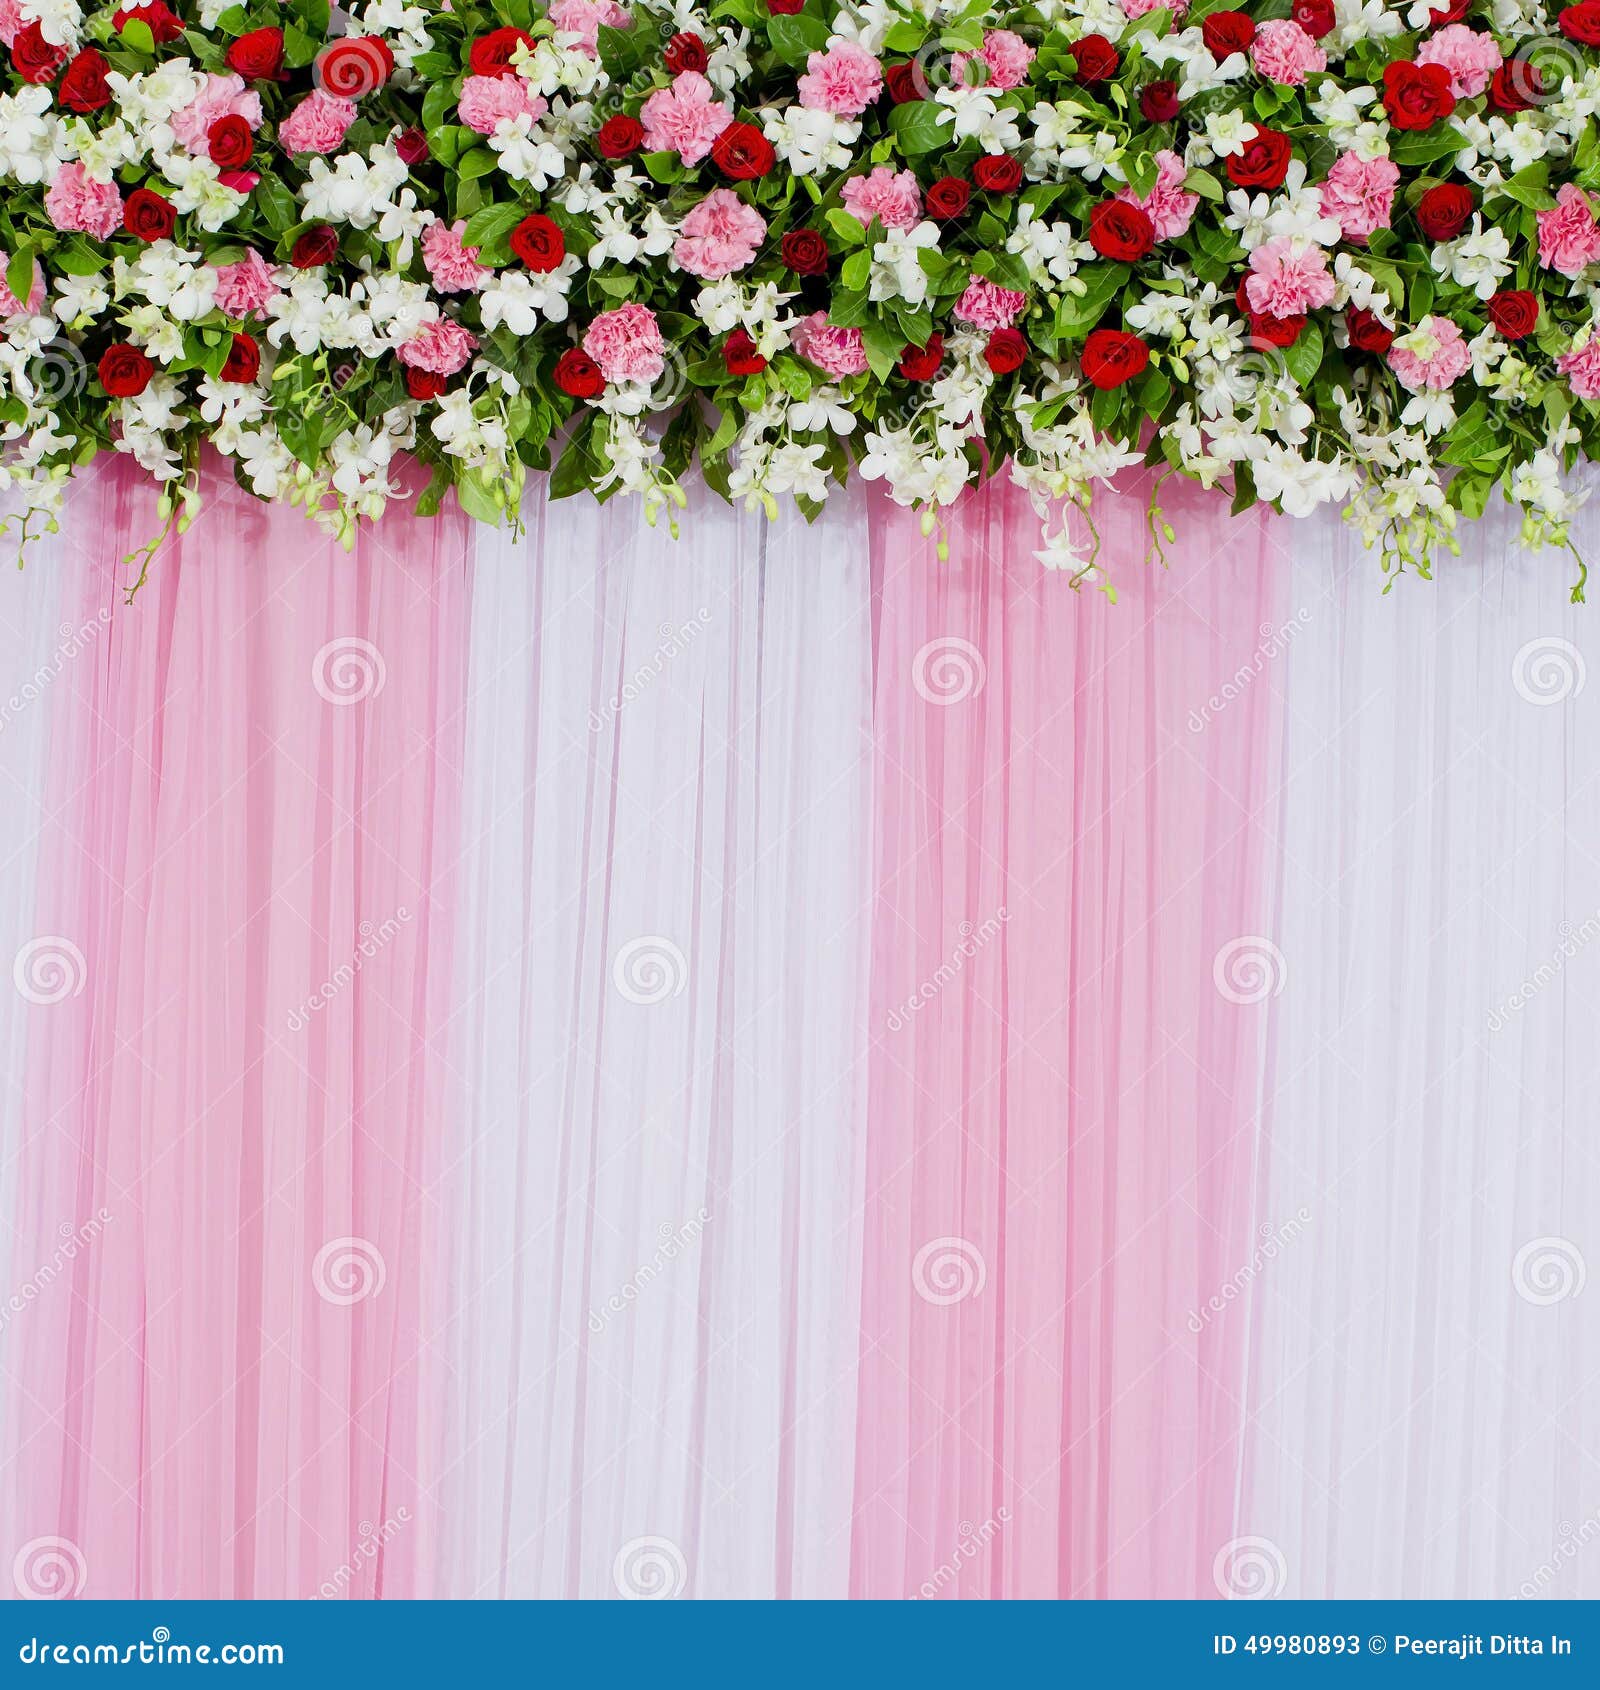 Floral backdrop stock image. Image of closeup, backdrop - 49980893